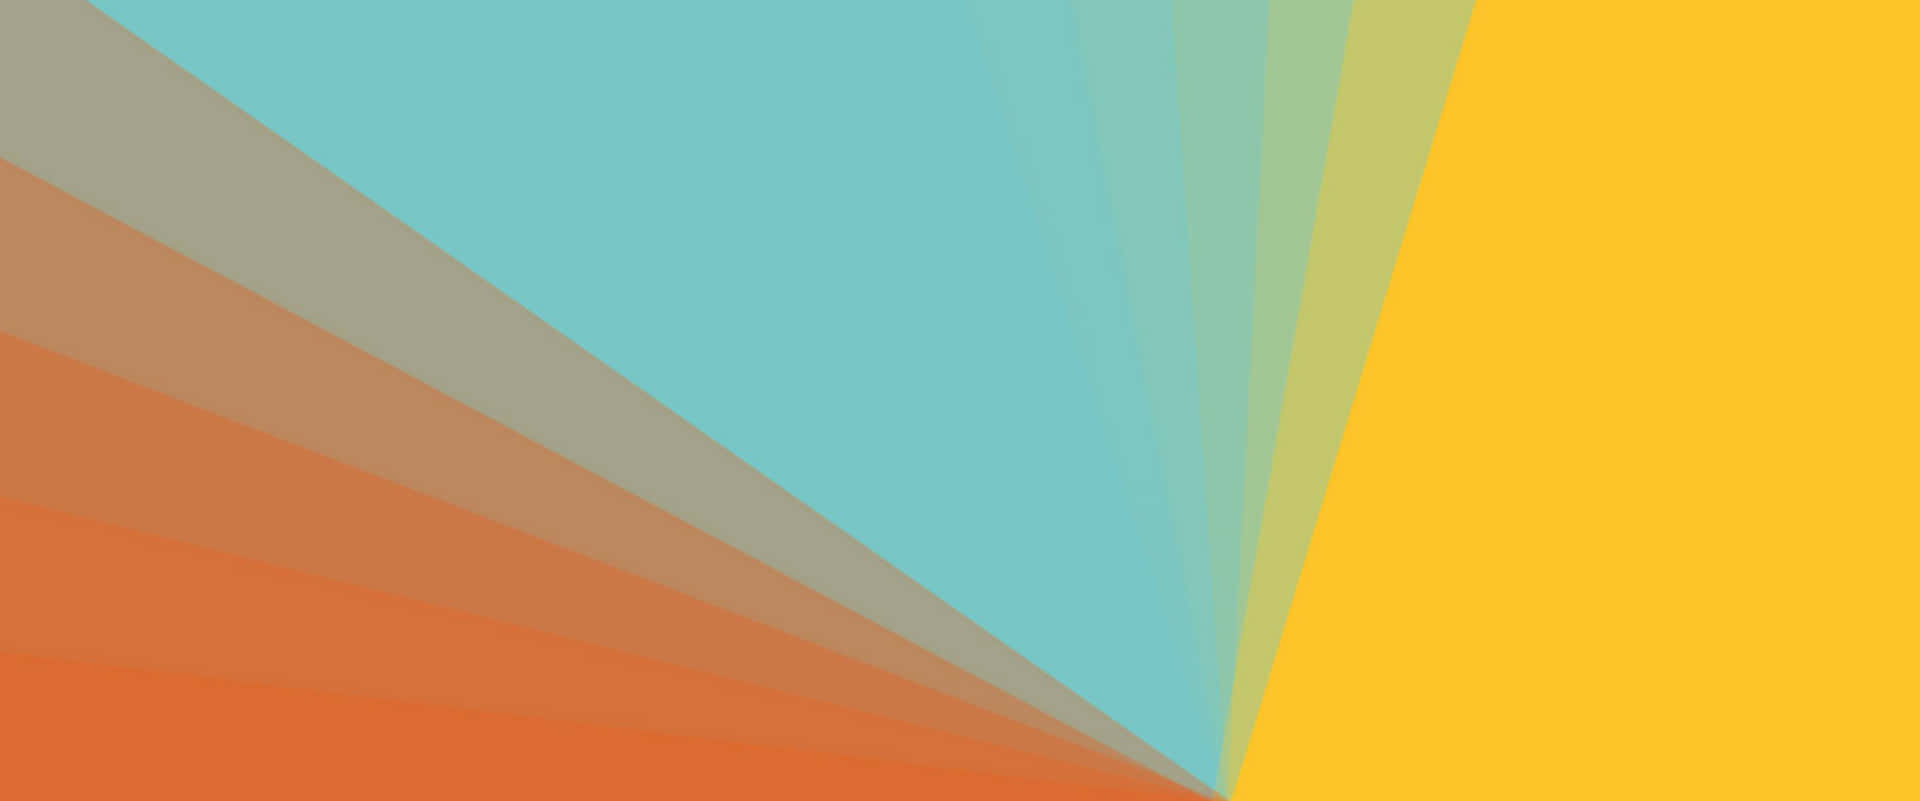 Rayosen Amarillo, Naranja Y Verde Azulado. Fondo de pantalla